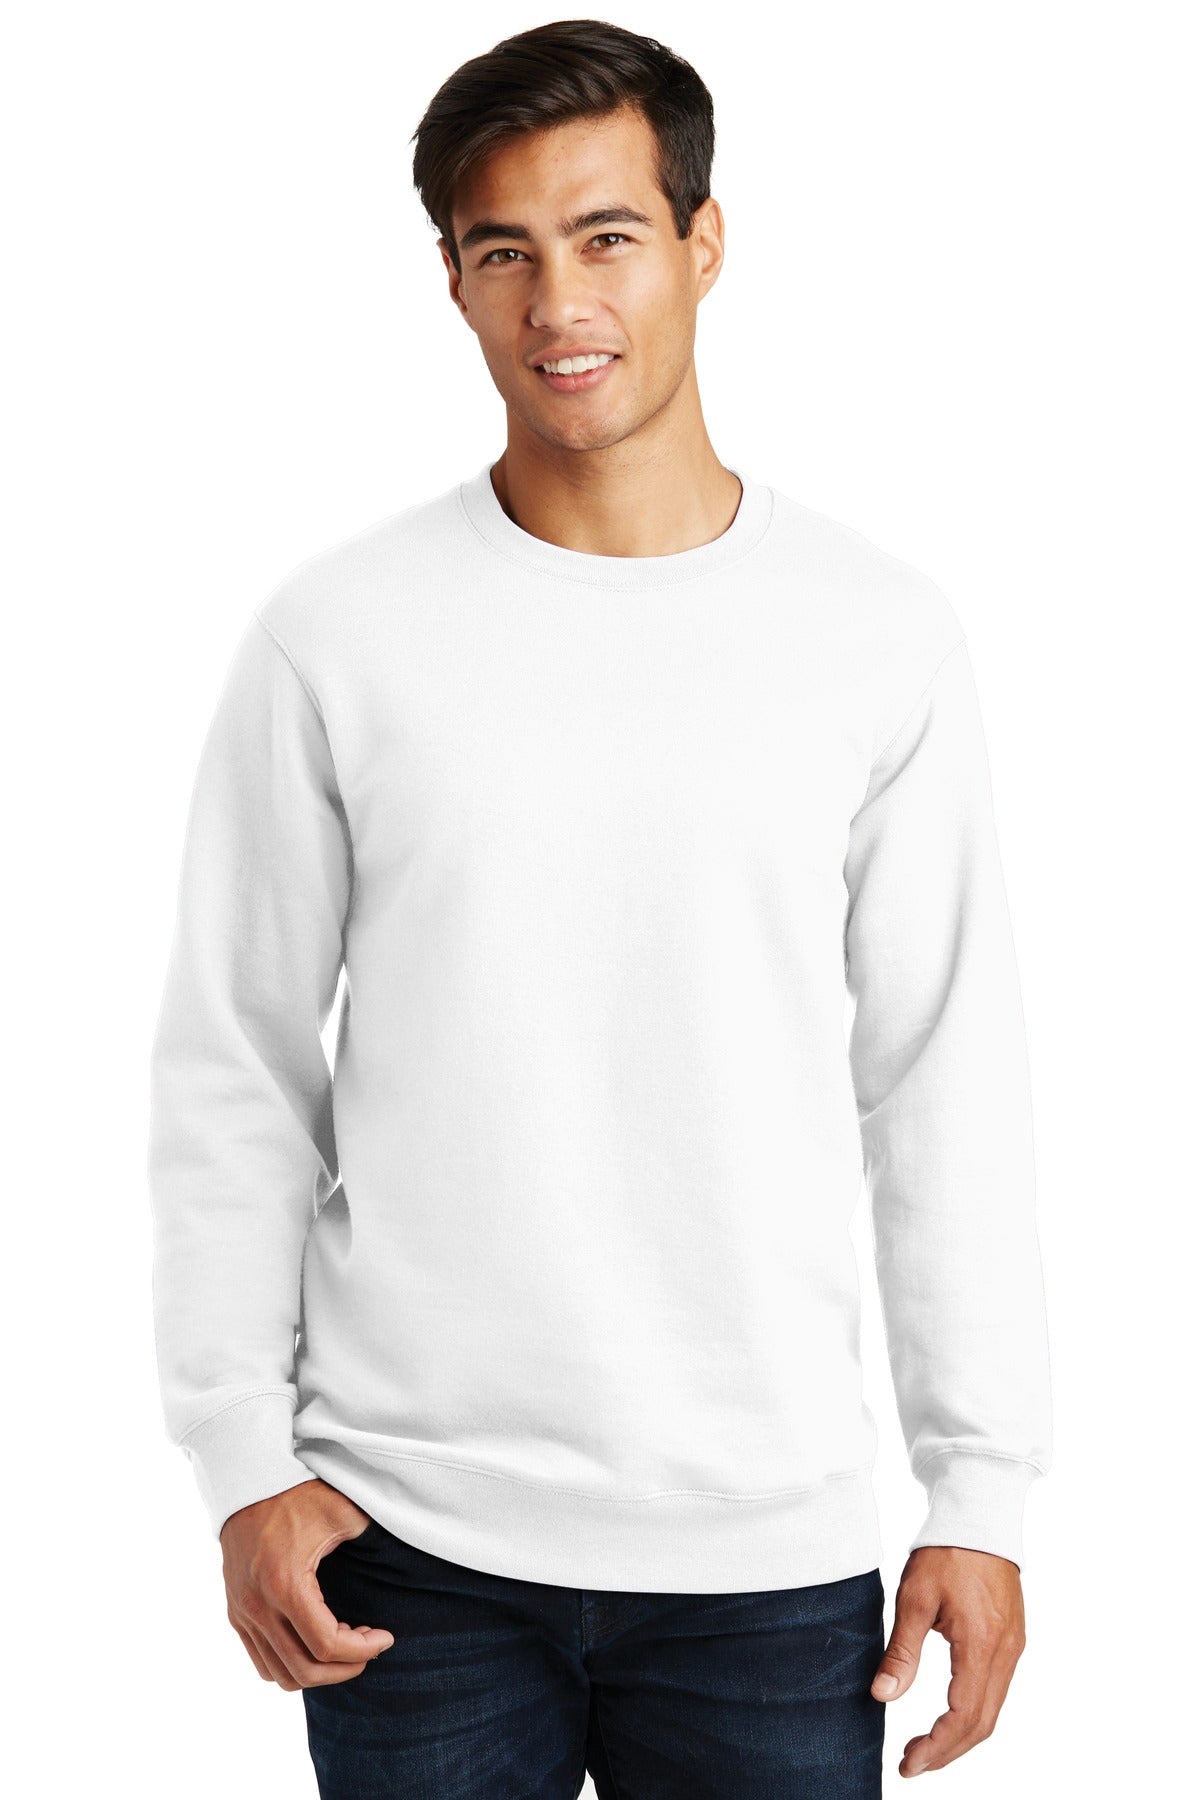 Port & Company® Fan Favorite Fleece Crewneck Sweatshirt. PC850 [White] - DFW Impression